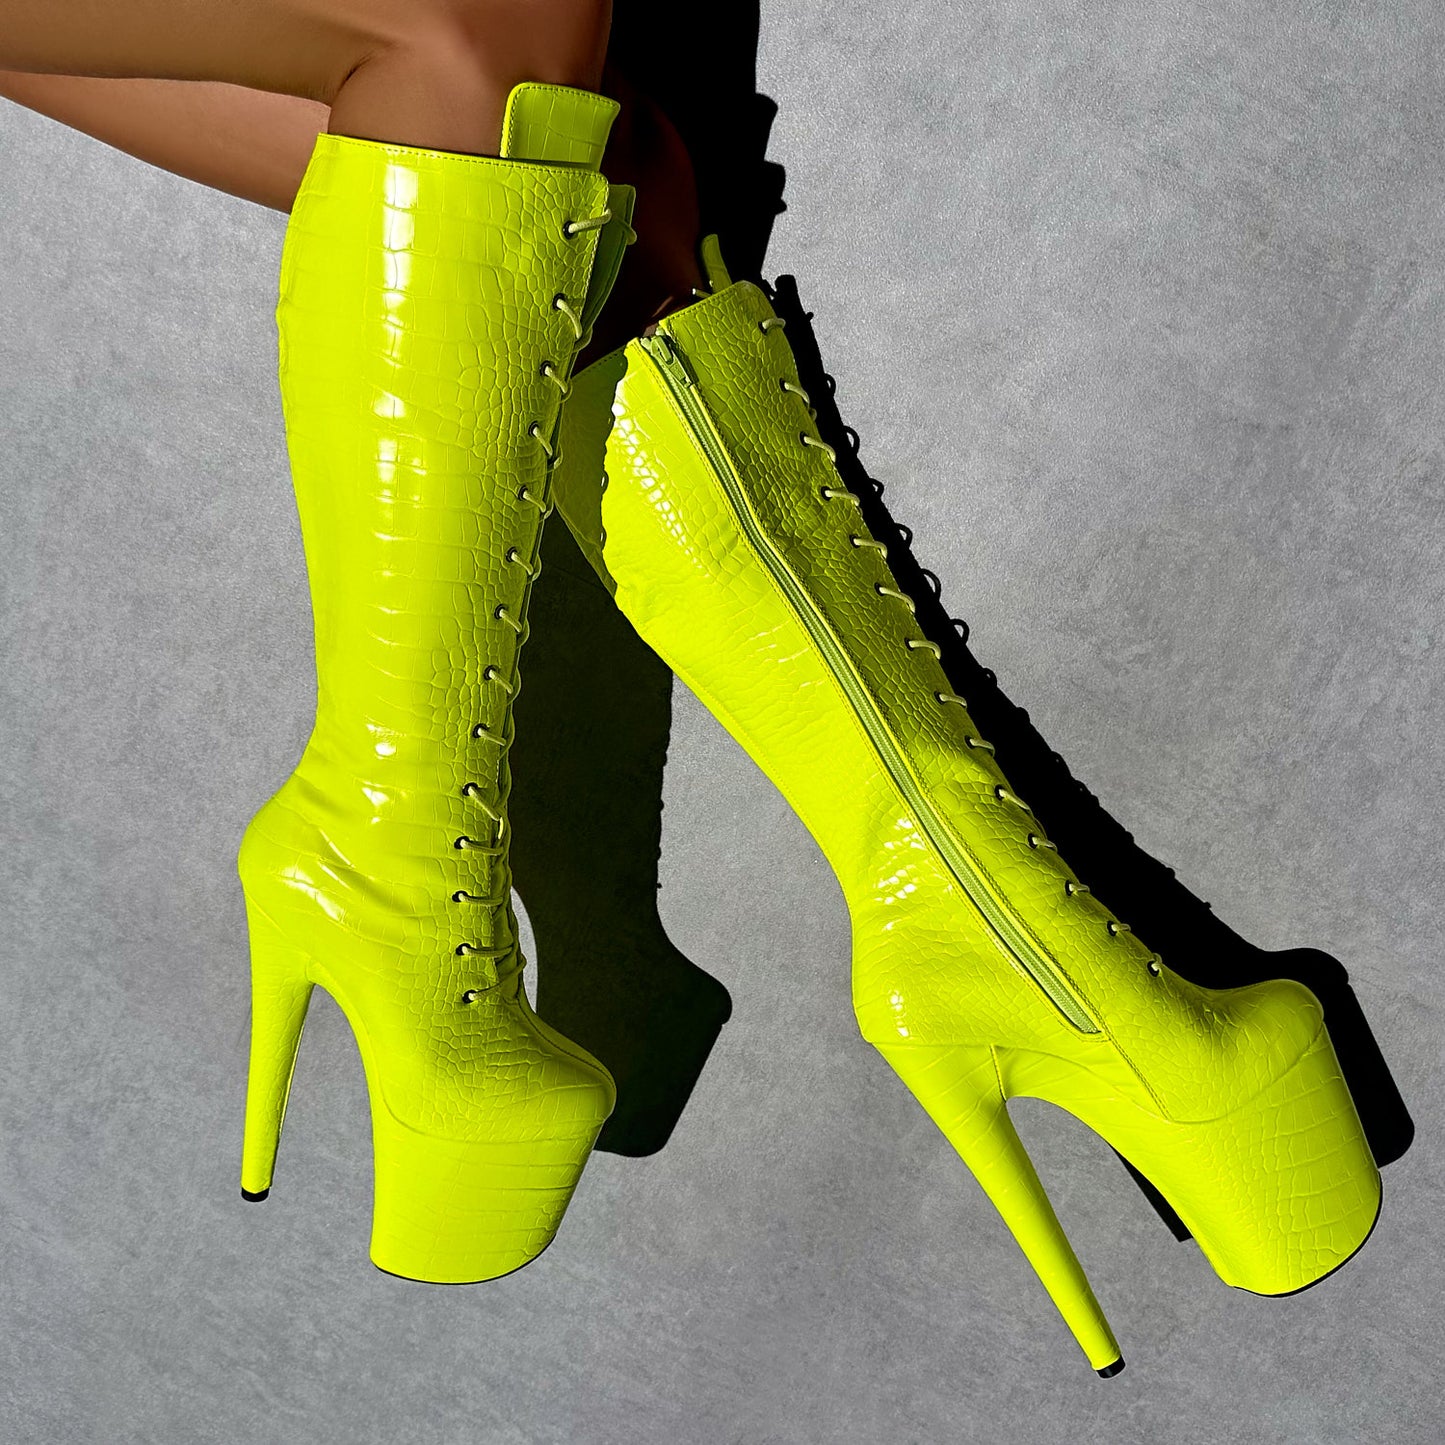 Oh Snap - Knee Boot - 8INCH, stripper shoe, stripper heel, pole heel, not a pleaser, platform, dancer, pole dance, floor work